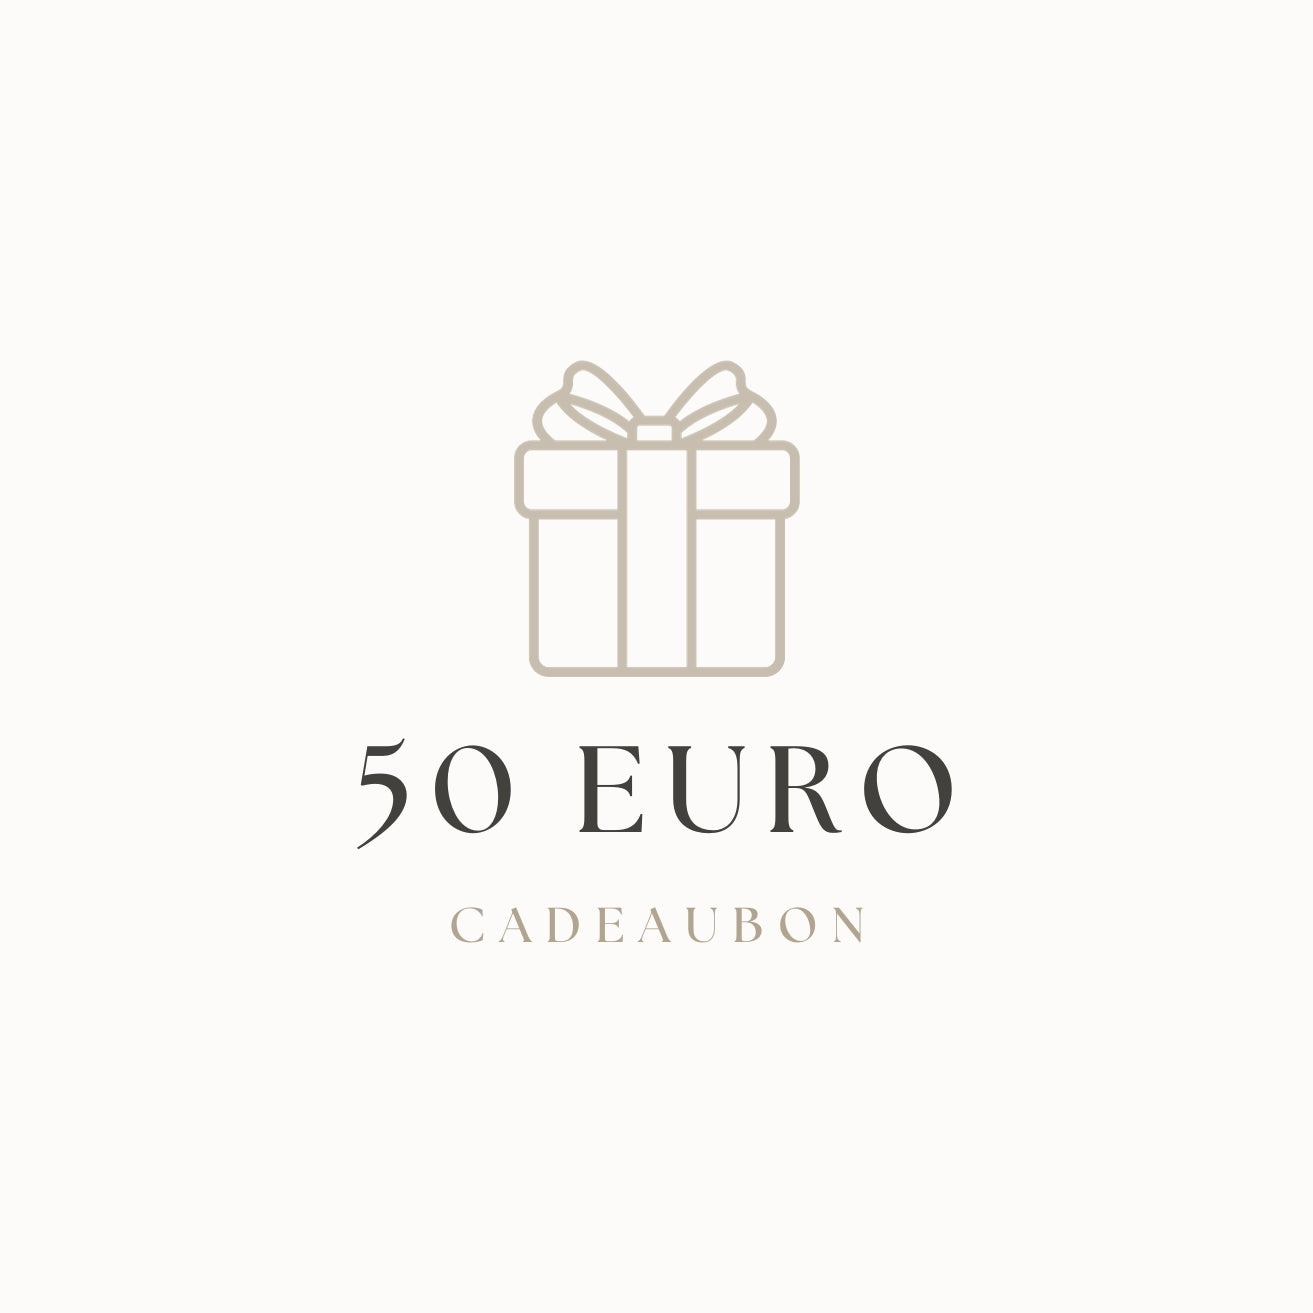 Cadeaubon | 50 euro